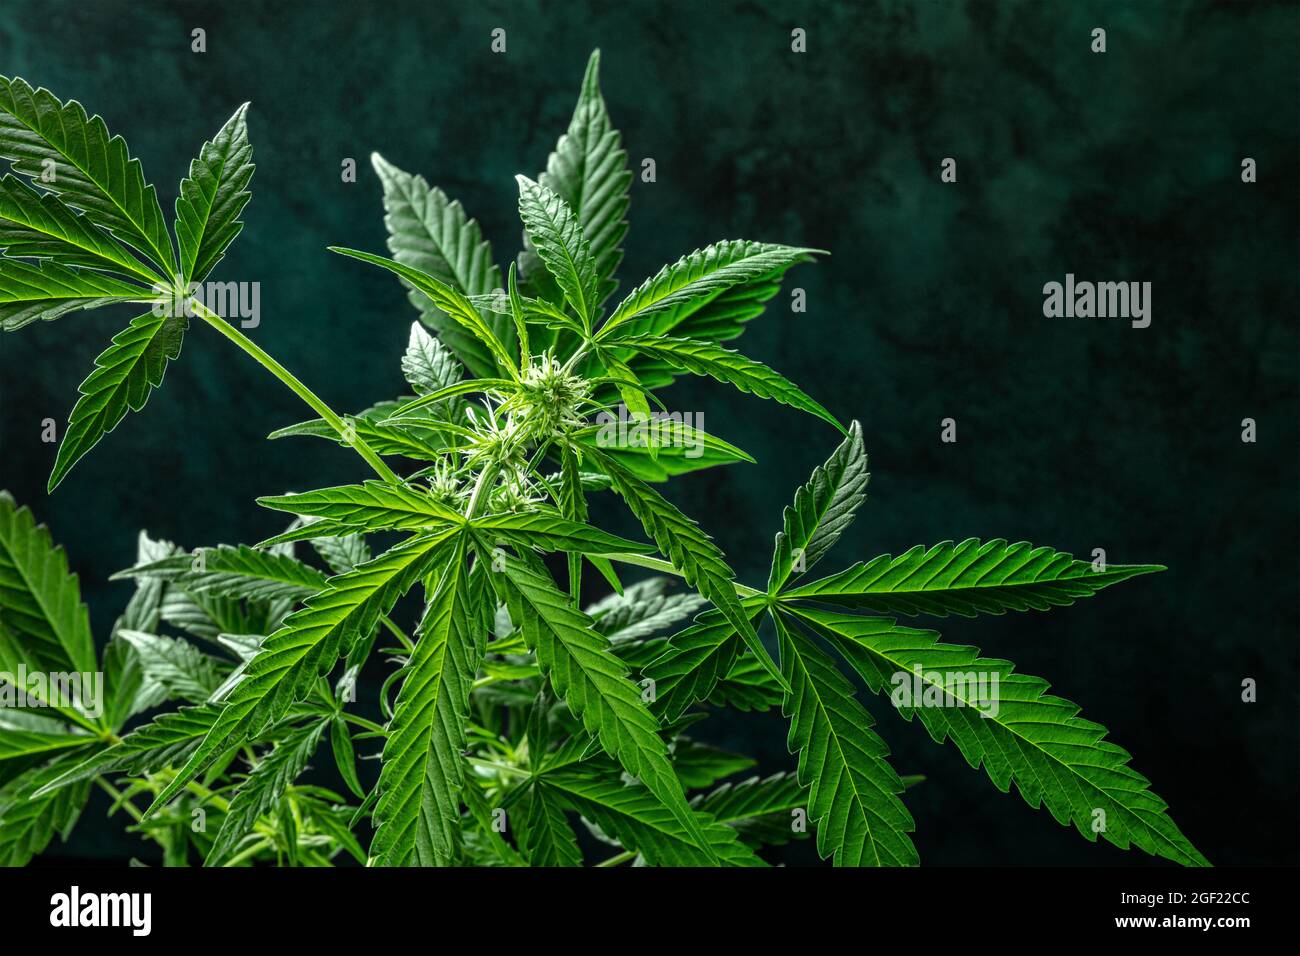 Planta de marihuana sobre un fondo oscuro. Cannabis con hojas verdes vibrantes y estigmas blancos, con un lugar para texto o logotipo Foto de stock